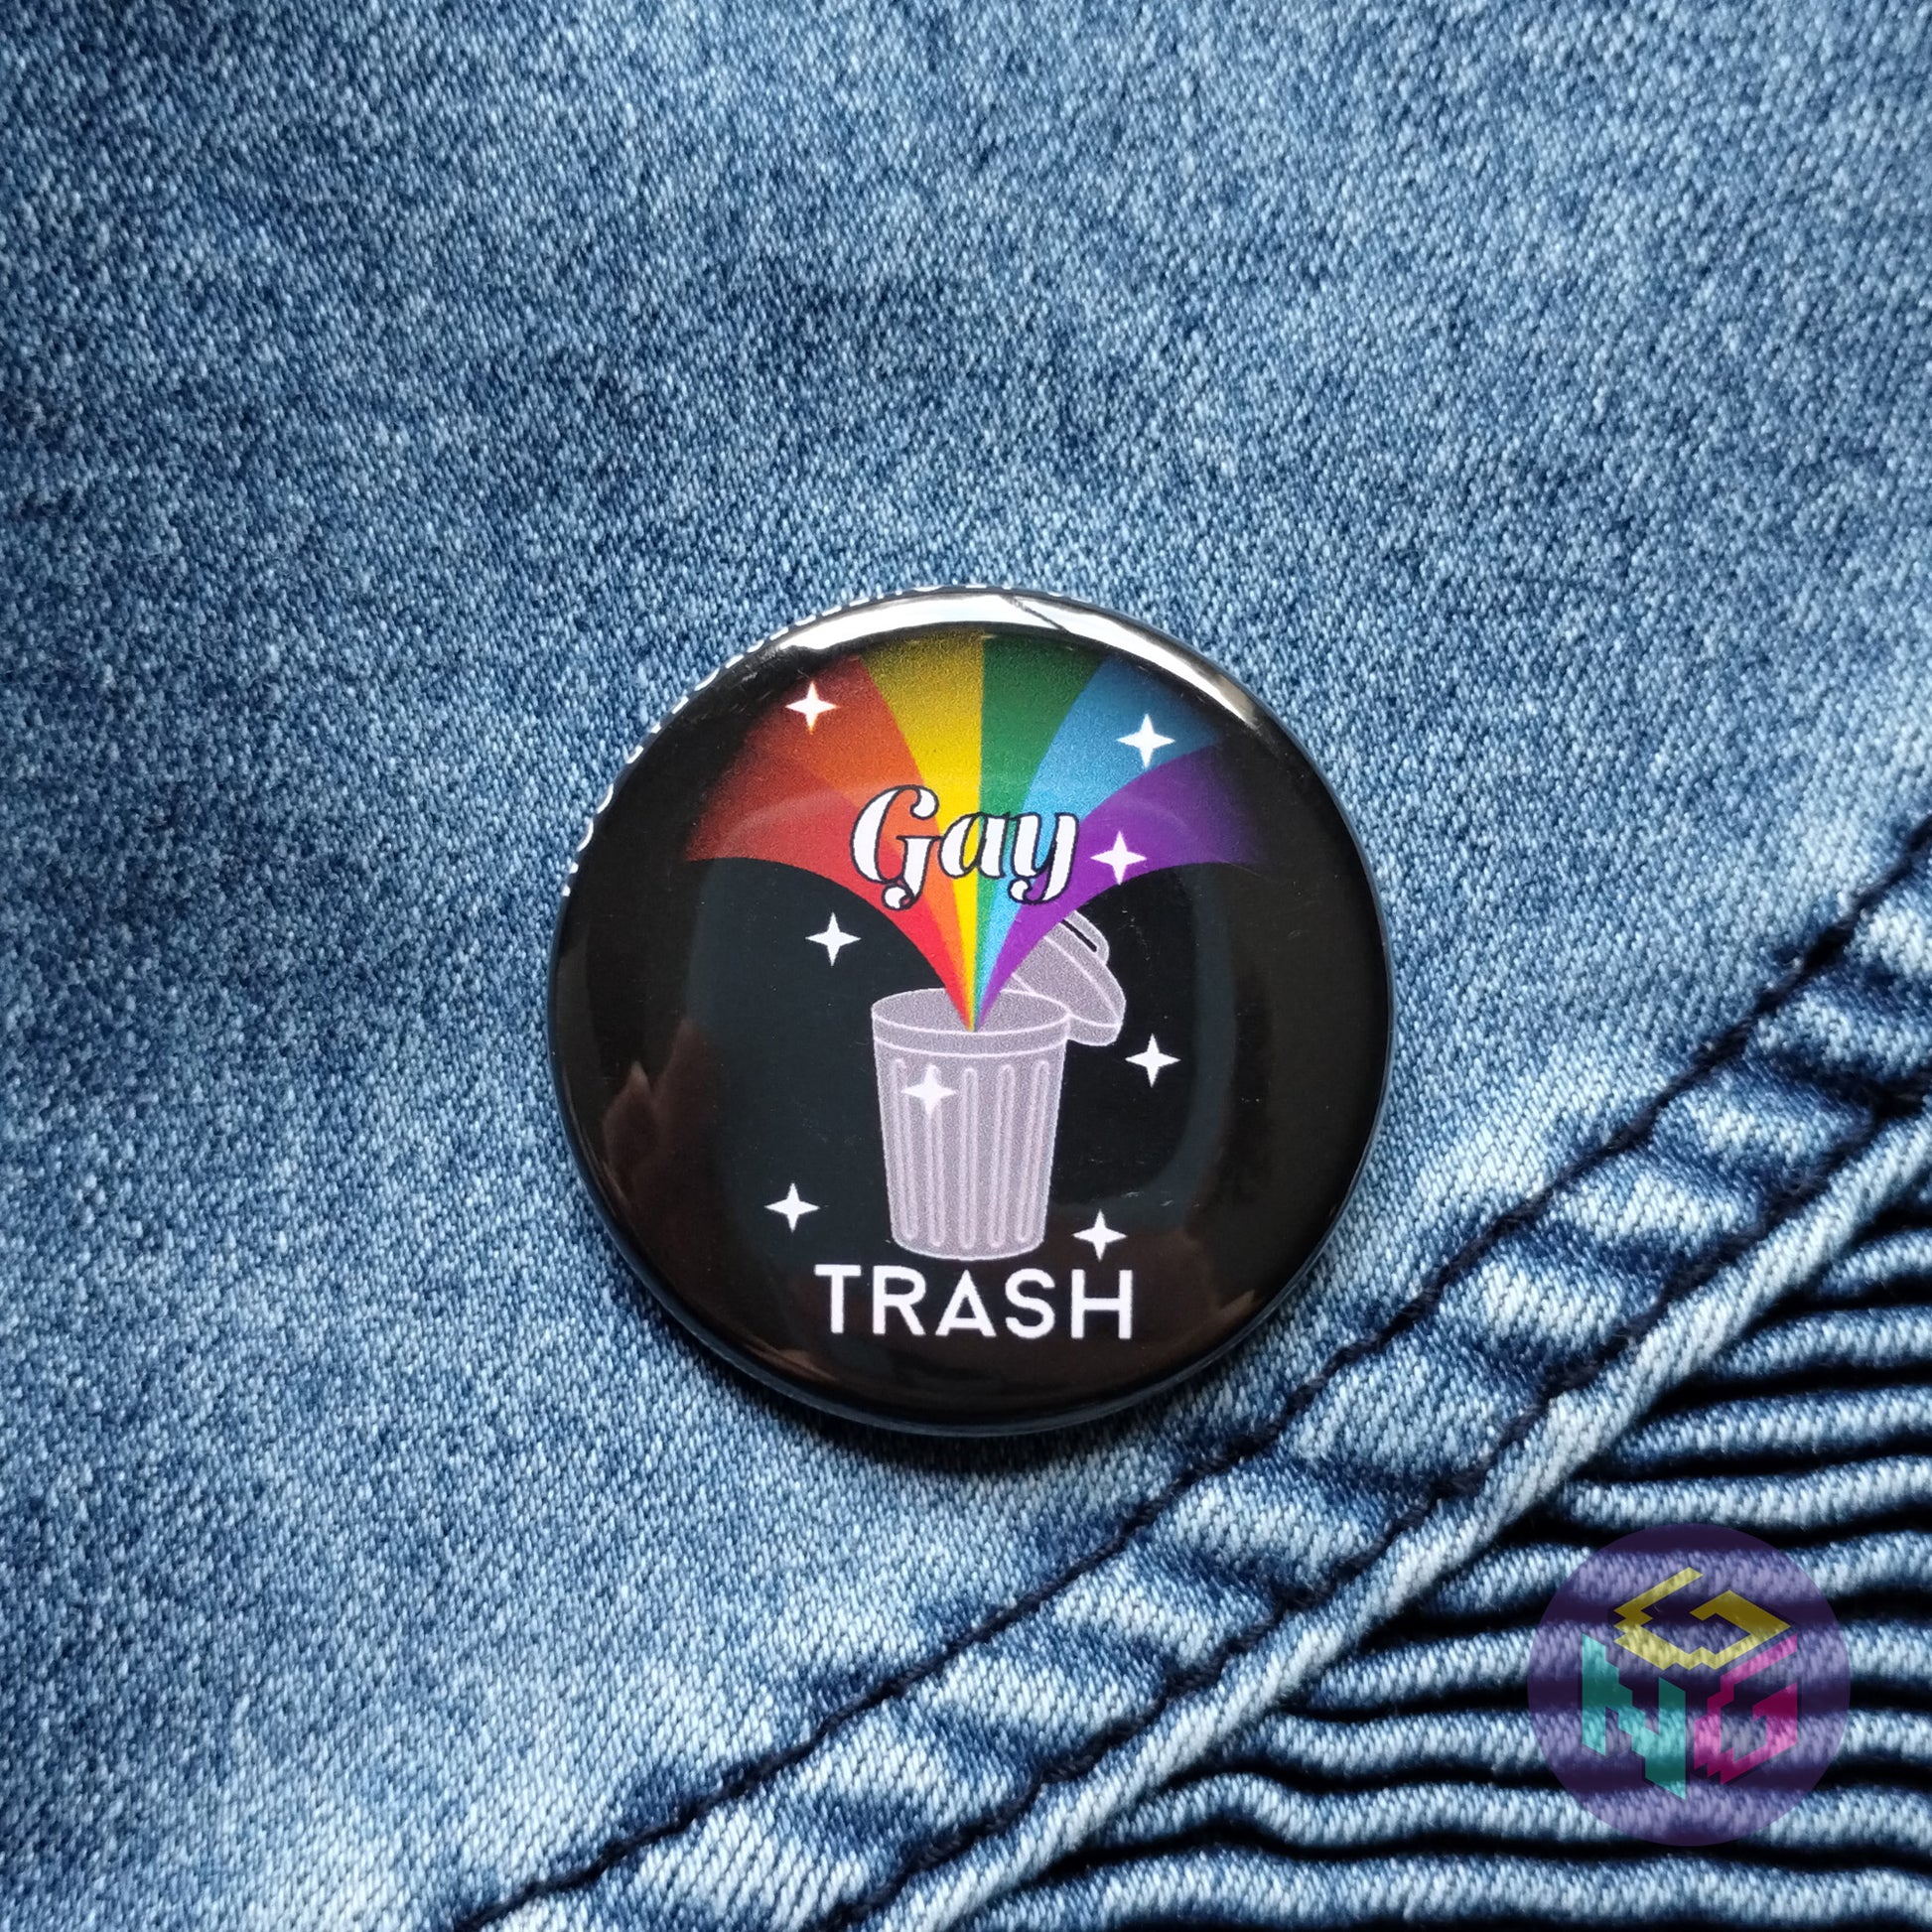 black gay trash pin on denim background